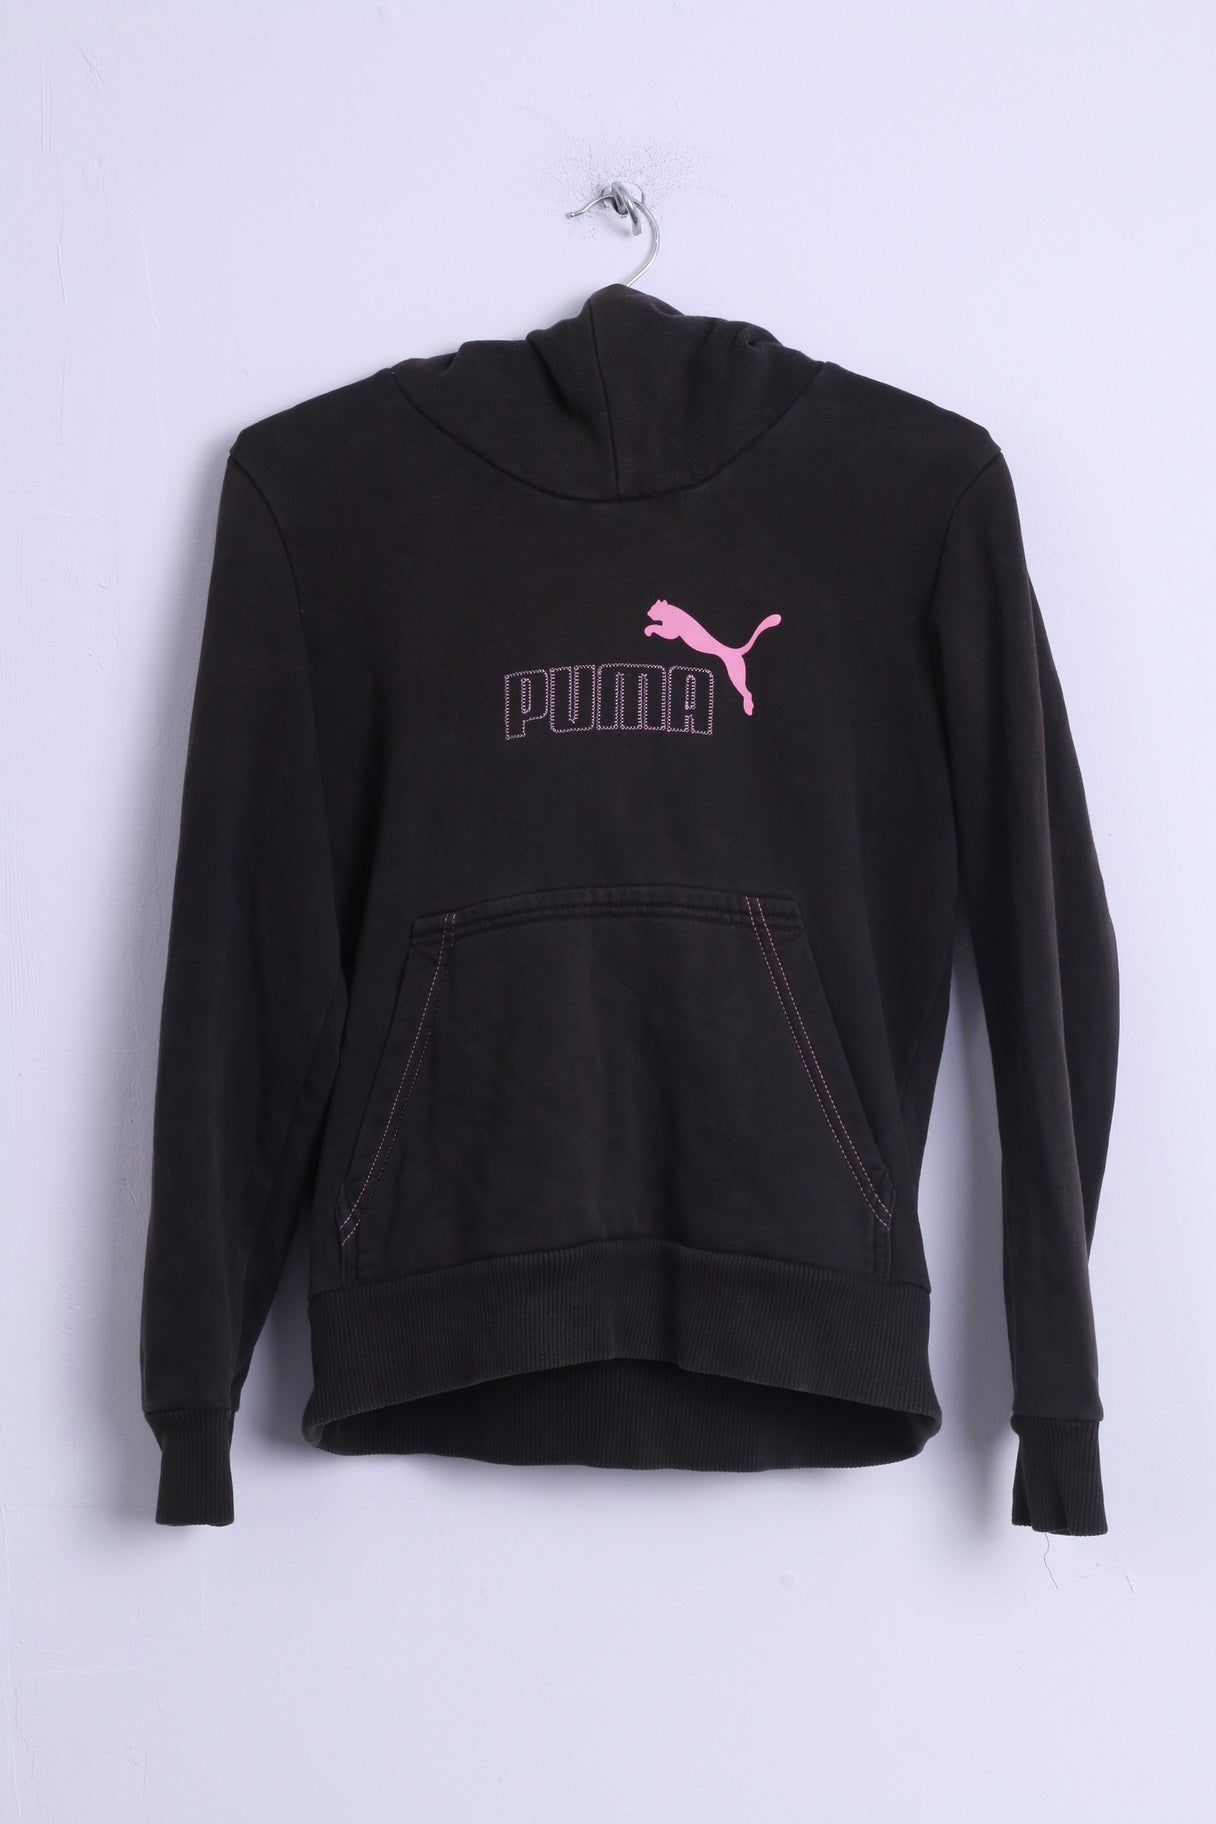 Puma Womens M Sweatshirt Black Cotton Hooded Kangaroo Pocket Top